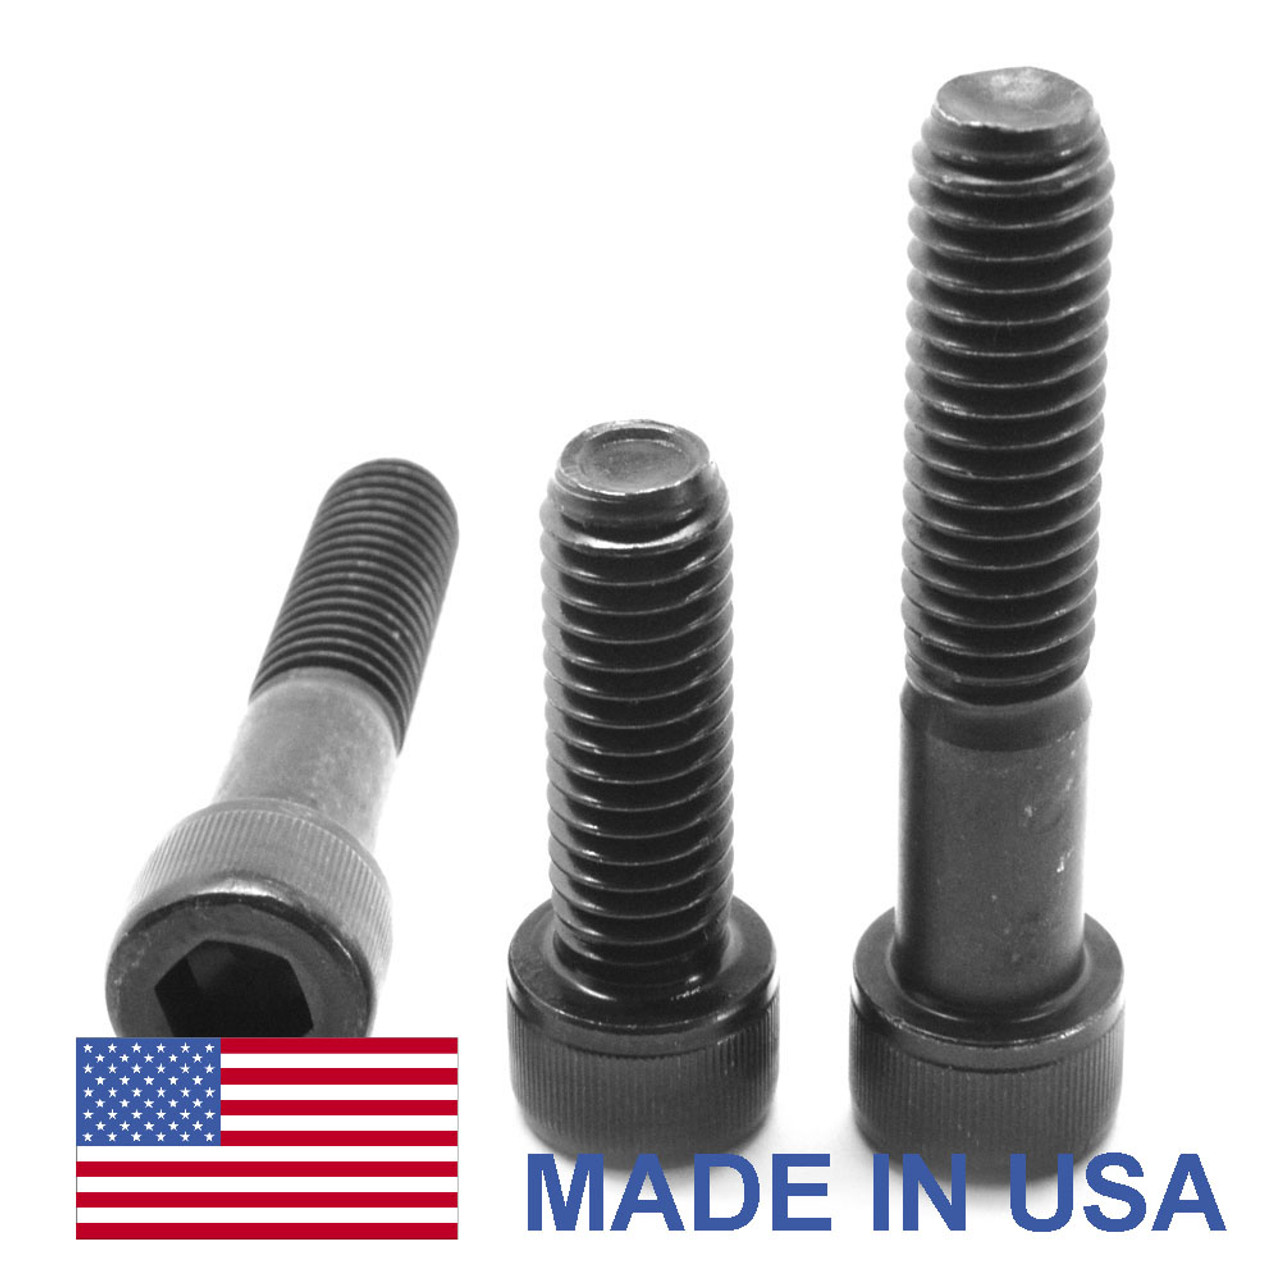 5/16-18 x 1/2 Coarse Thread Socket Head Cap Screw - USA Alloy Steel Black Oxide